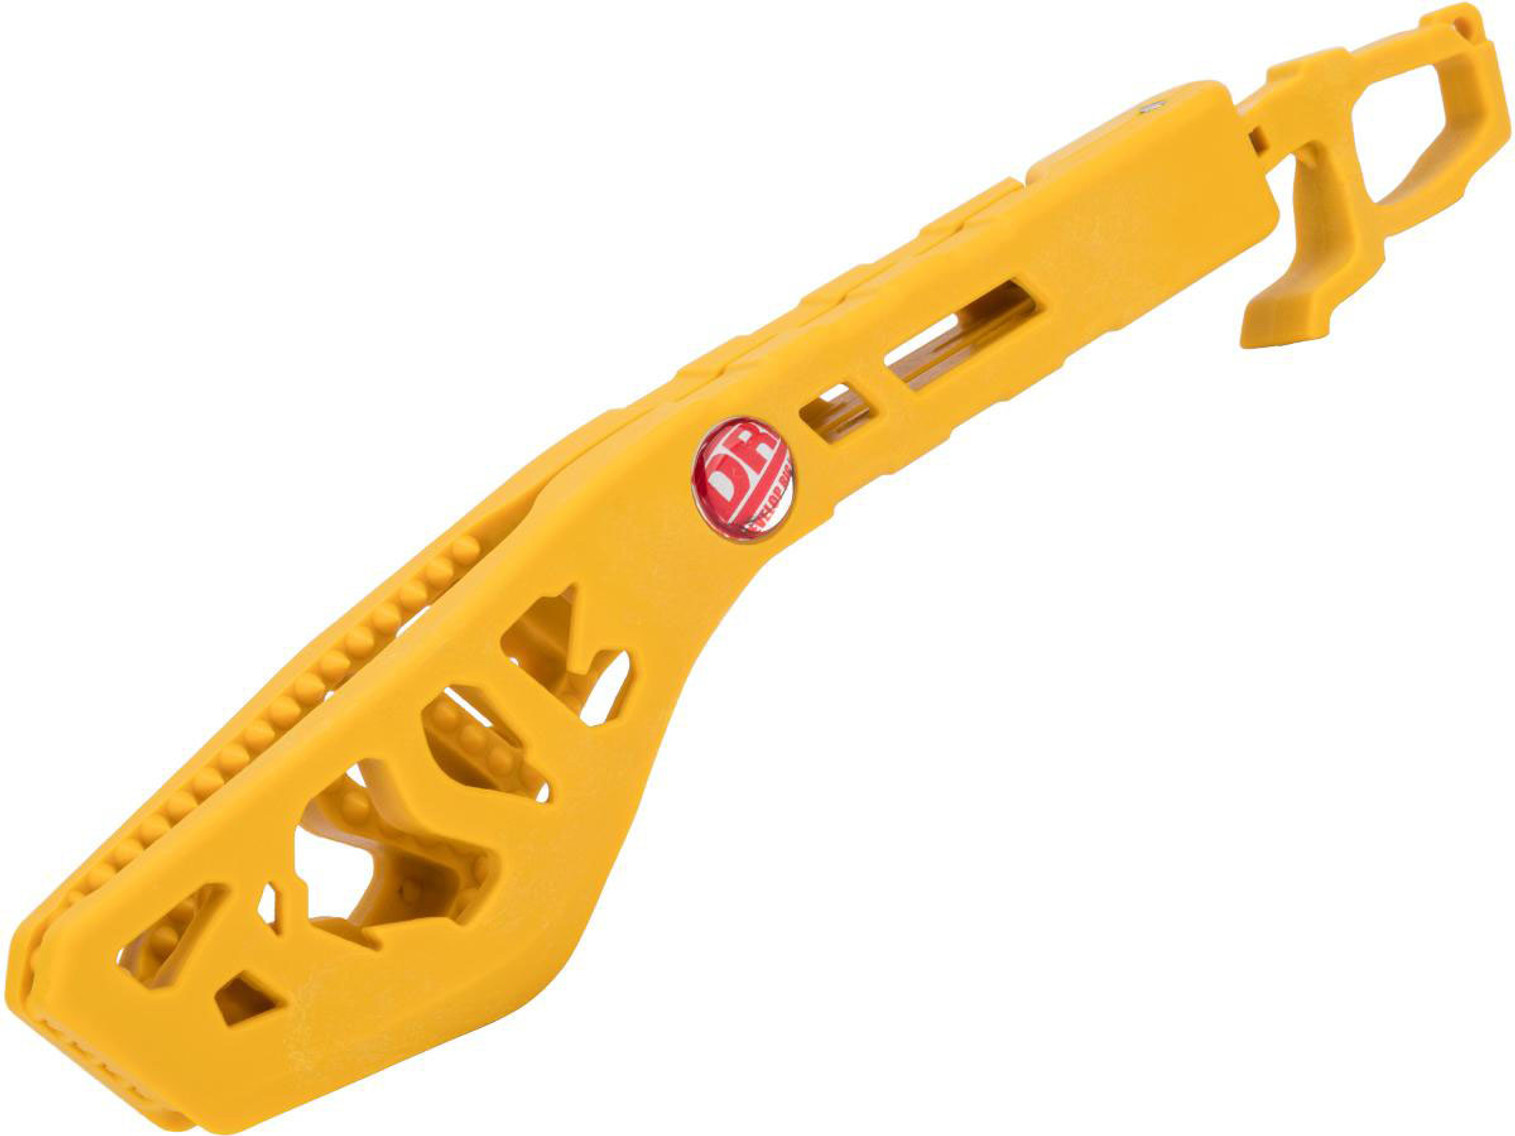 DRESS "Dino Grip" Enhanced Fish Gripper (Color: Yellow)